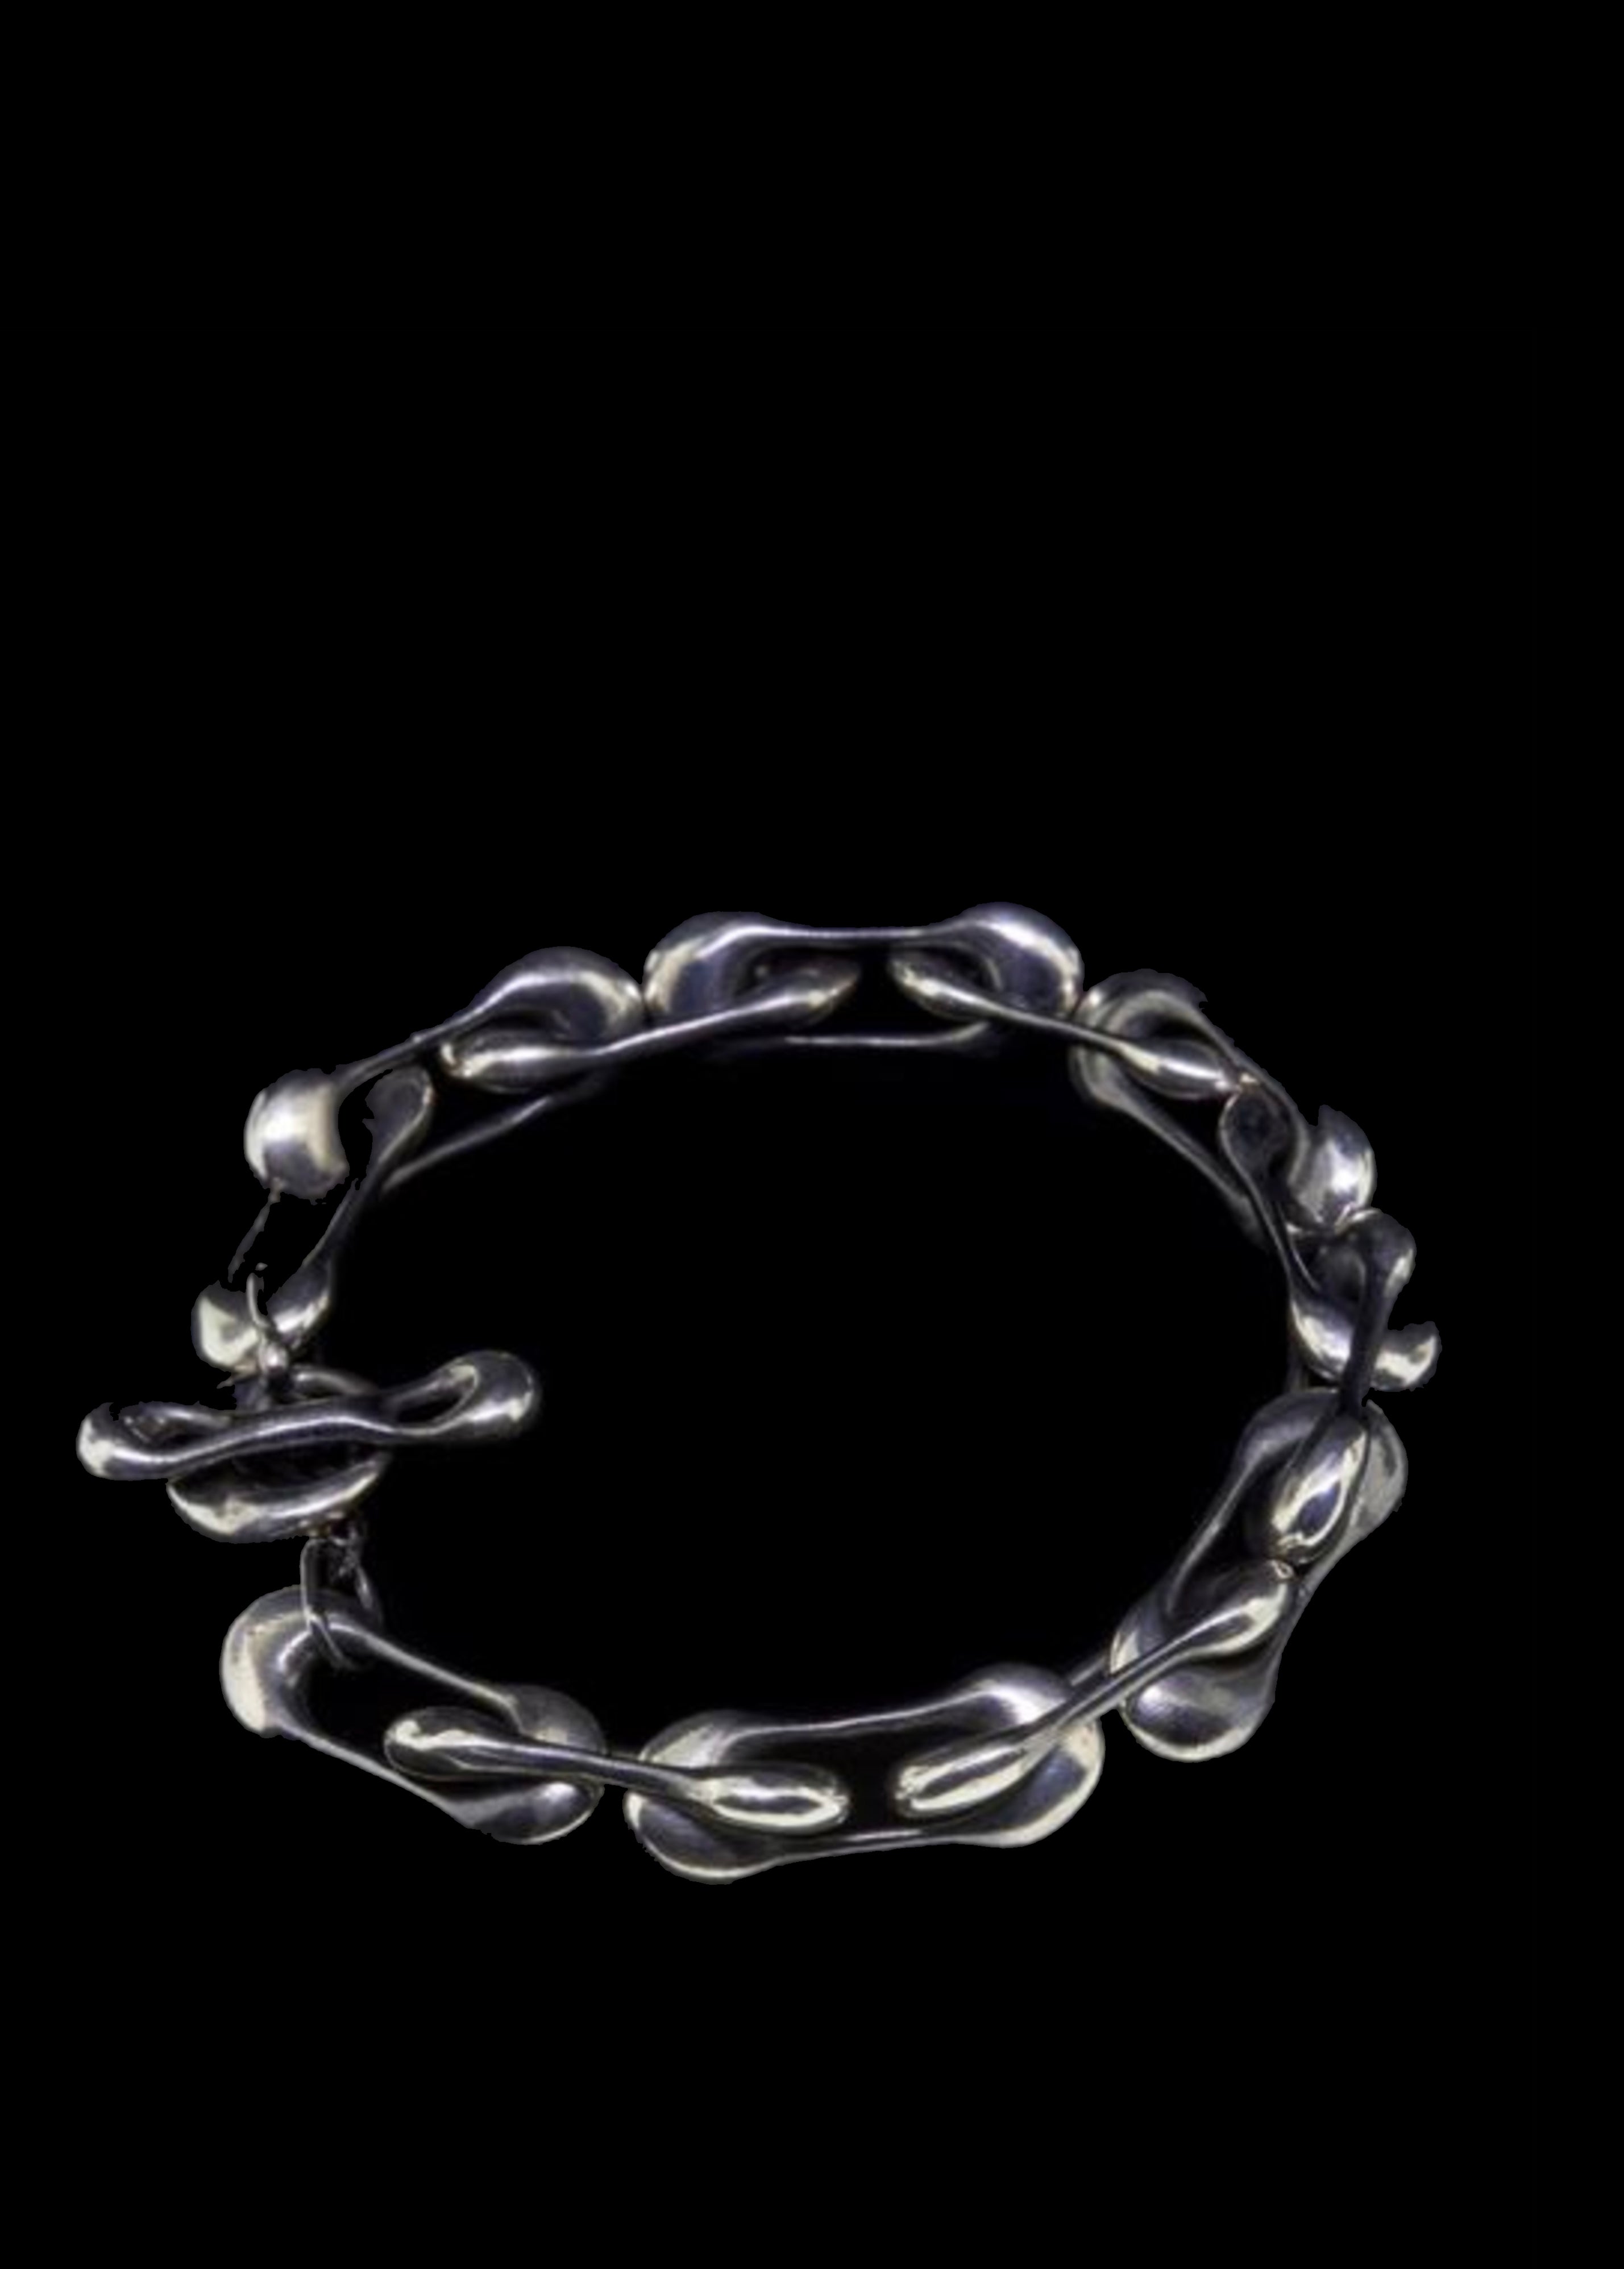 Pin on Men's Chain Bracelets